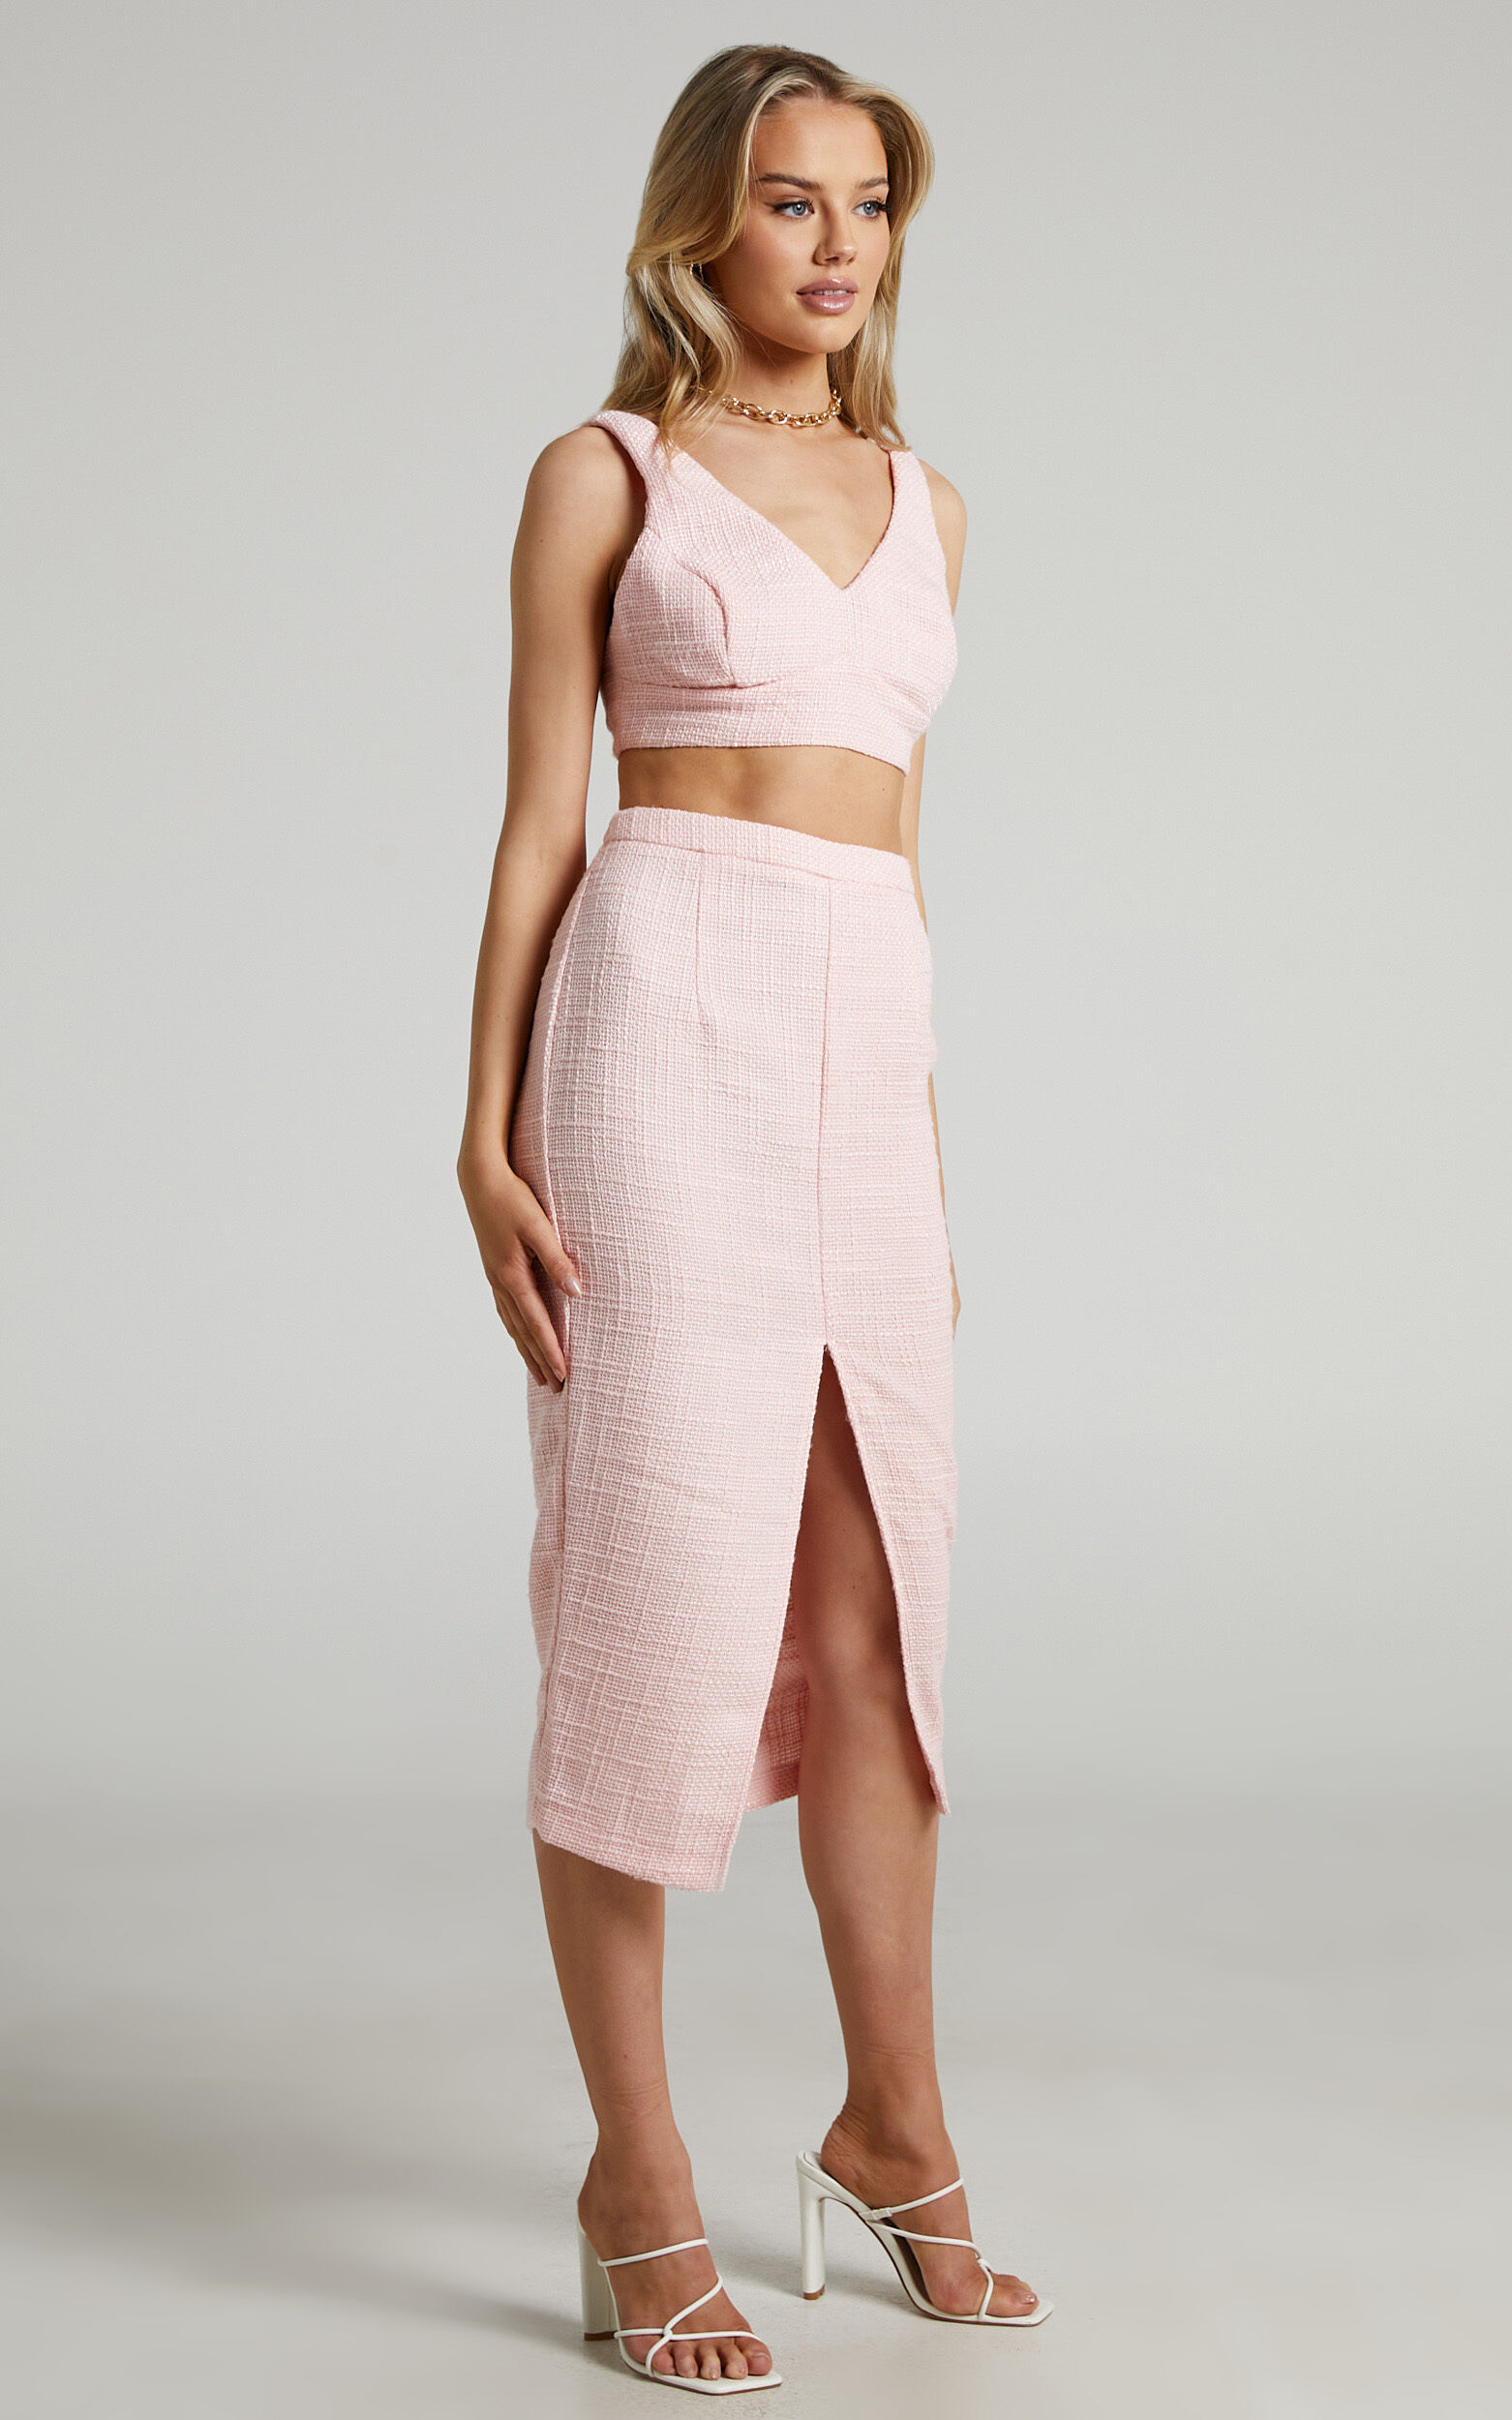 Jhessa Tweed Crop Top and Split Front Midi Skirt Two Piece Set in Pale Pink - 04, PNK1, super-hi-res image number null